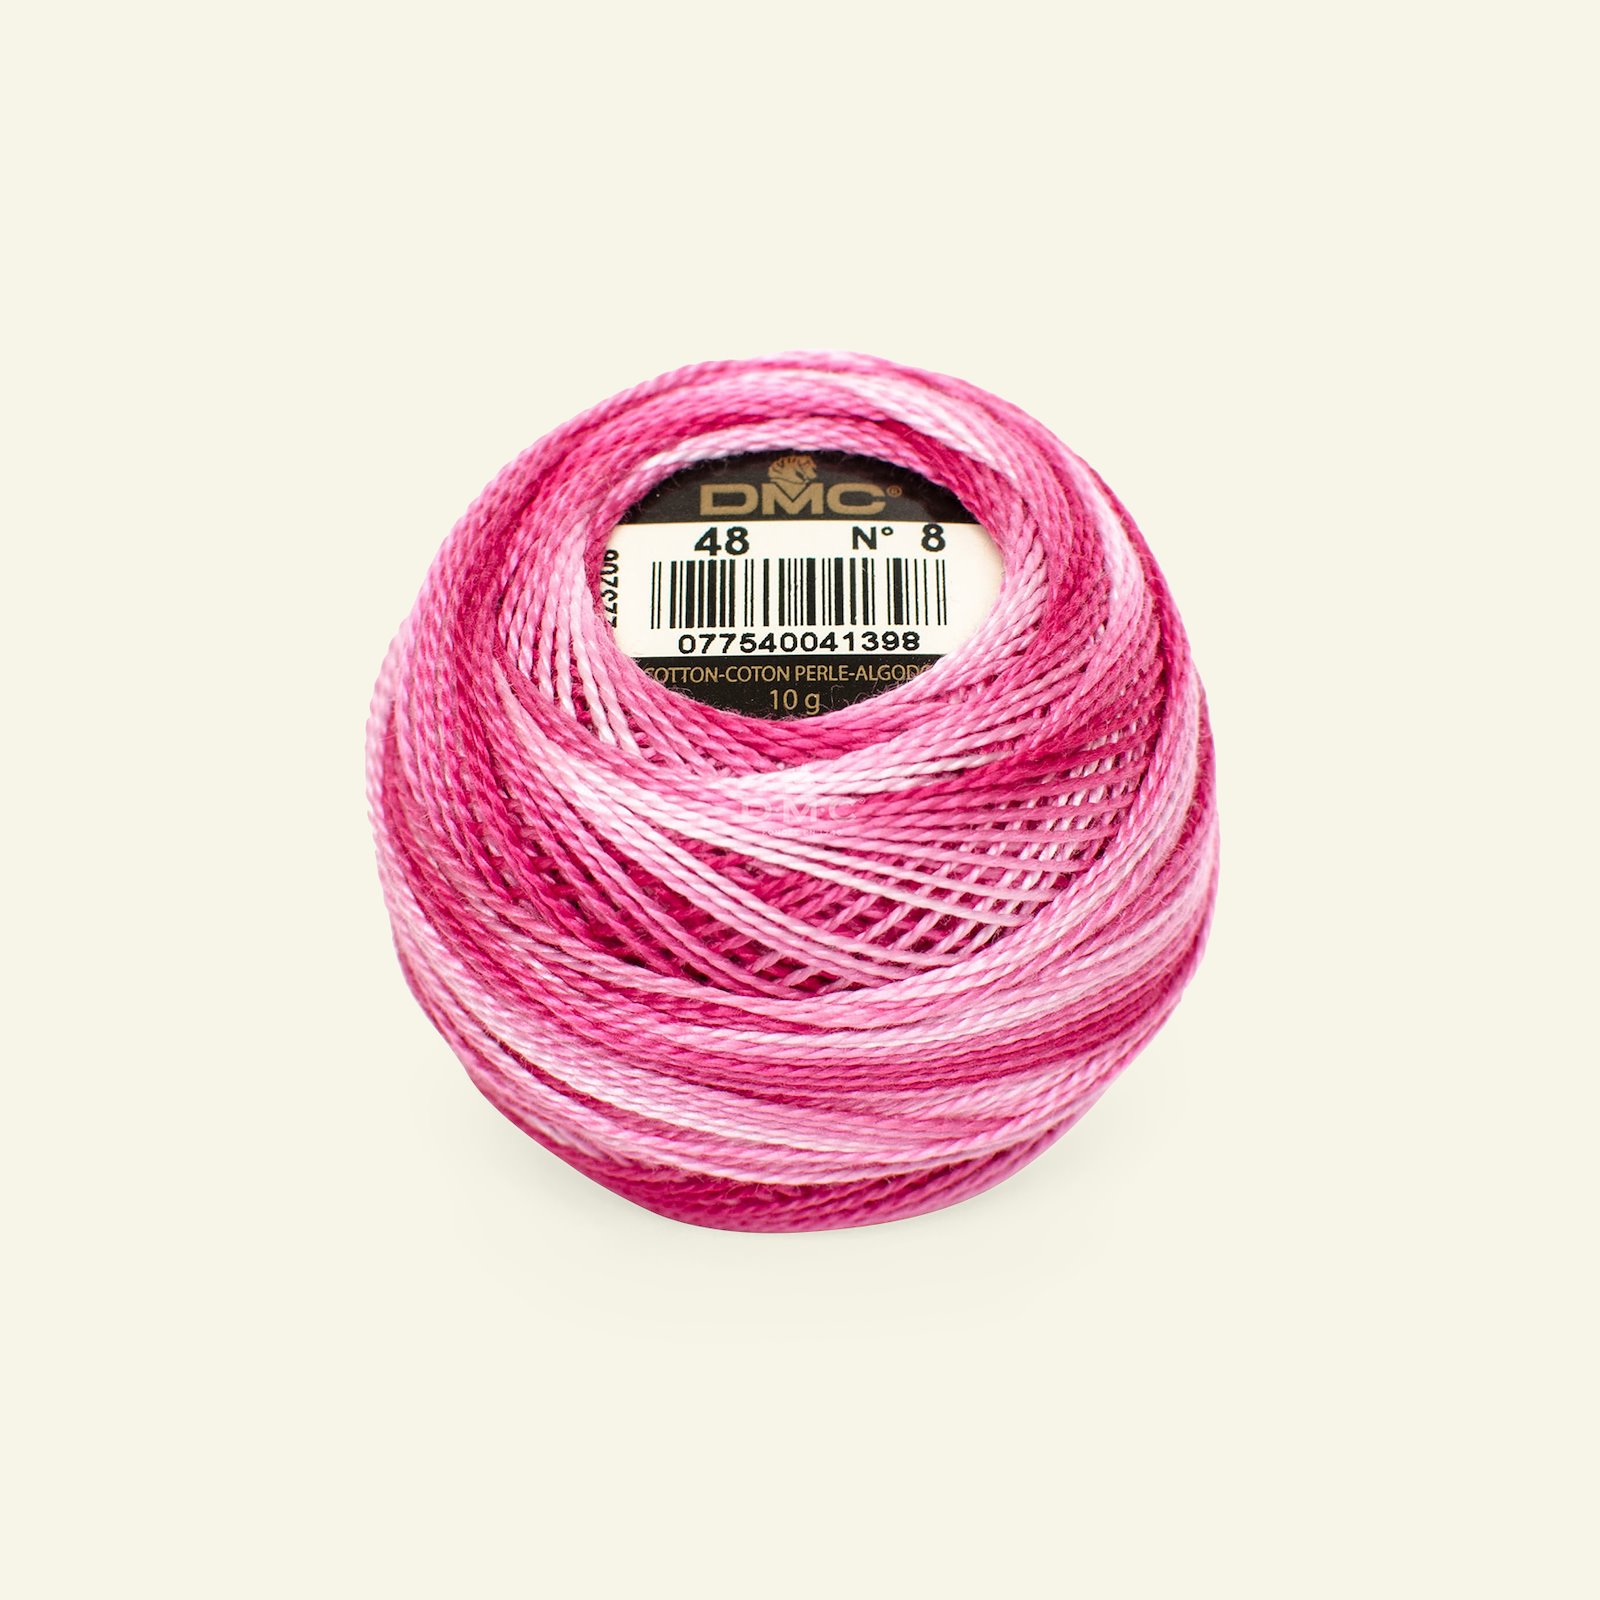 DMC Perlgarn Nr. 8 Mix rosa|Art. 116 Farbe 48 (Coton Perlé) 35124_pack